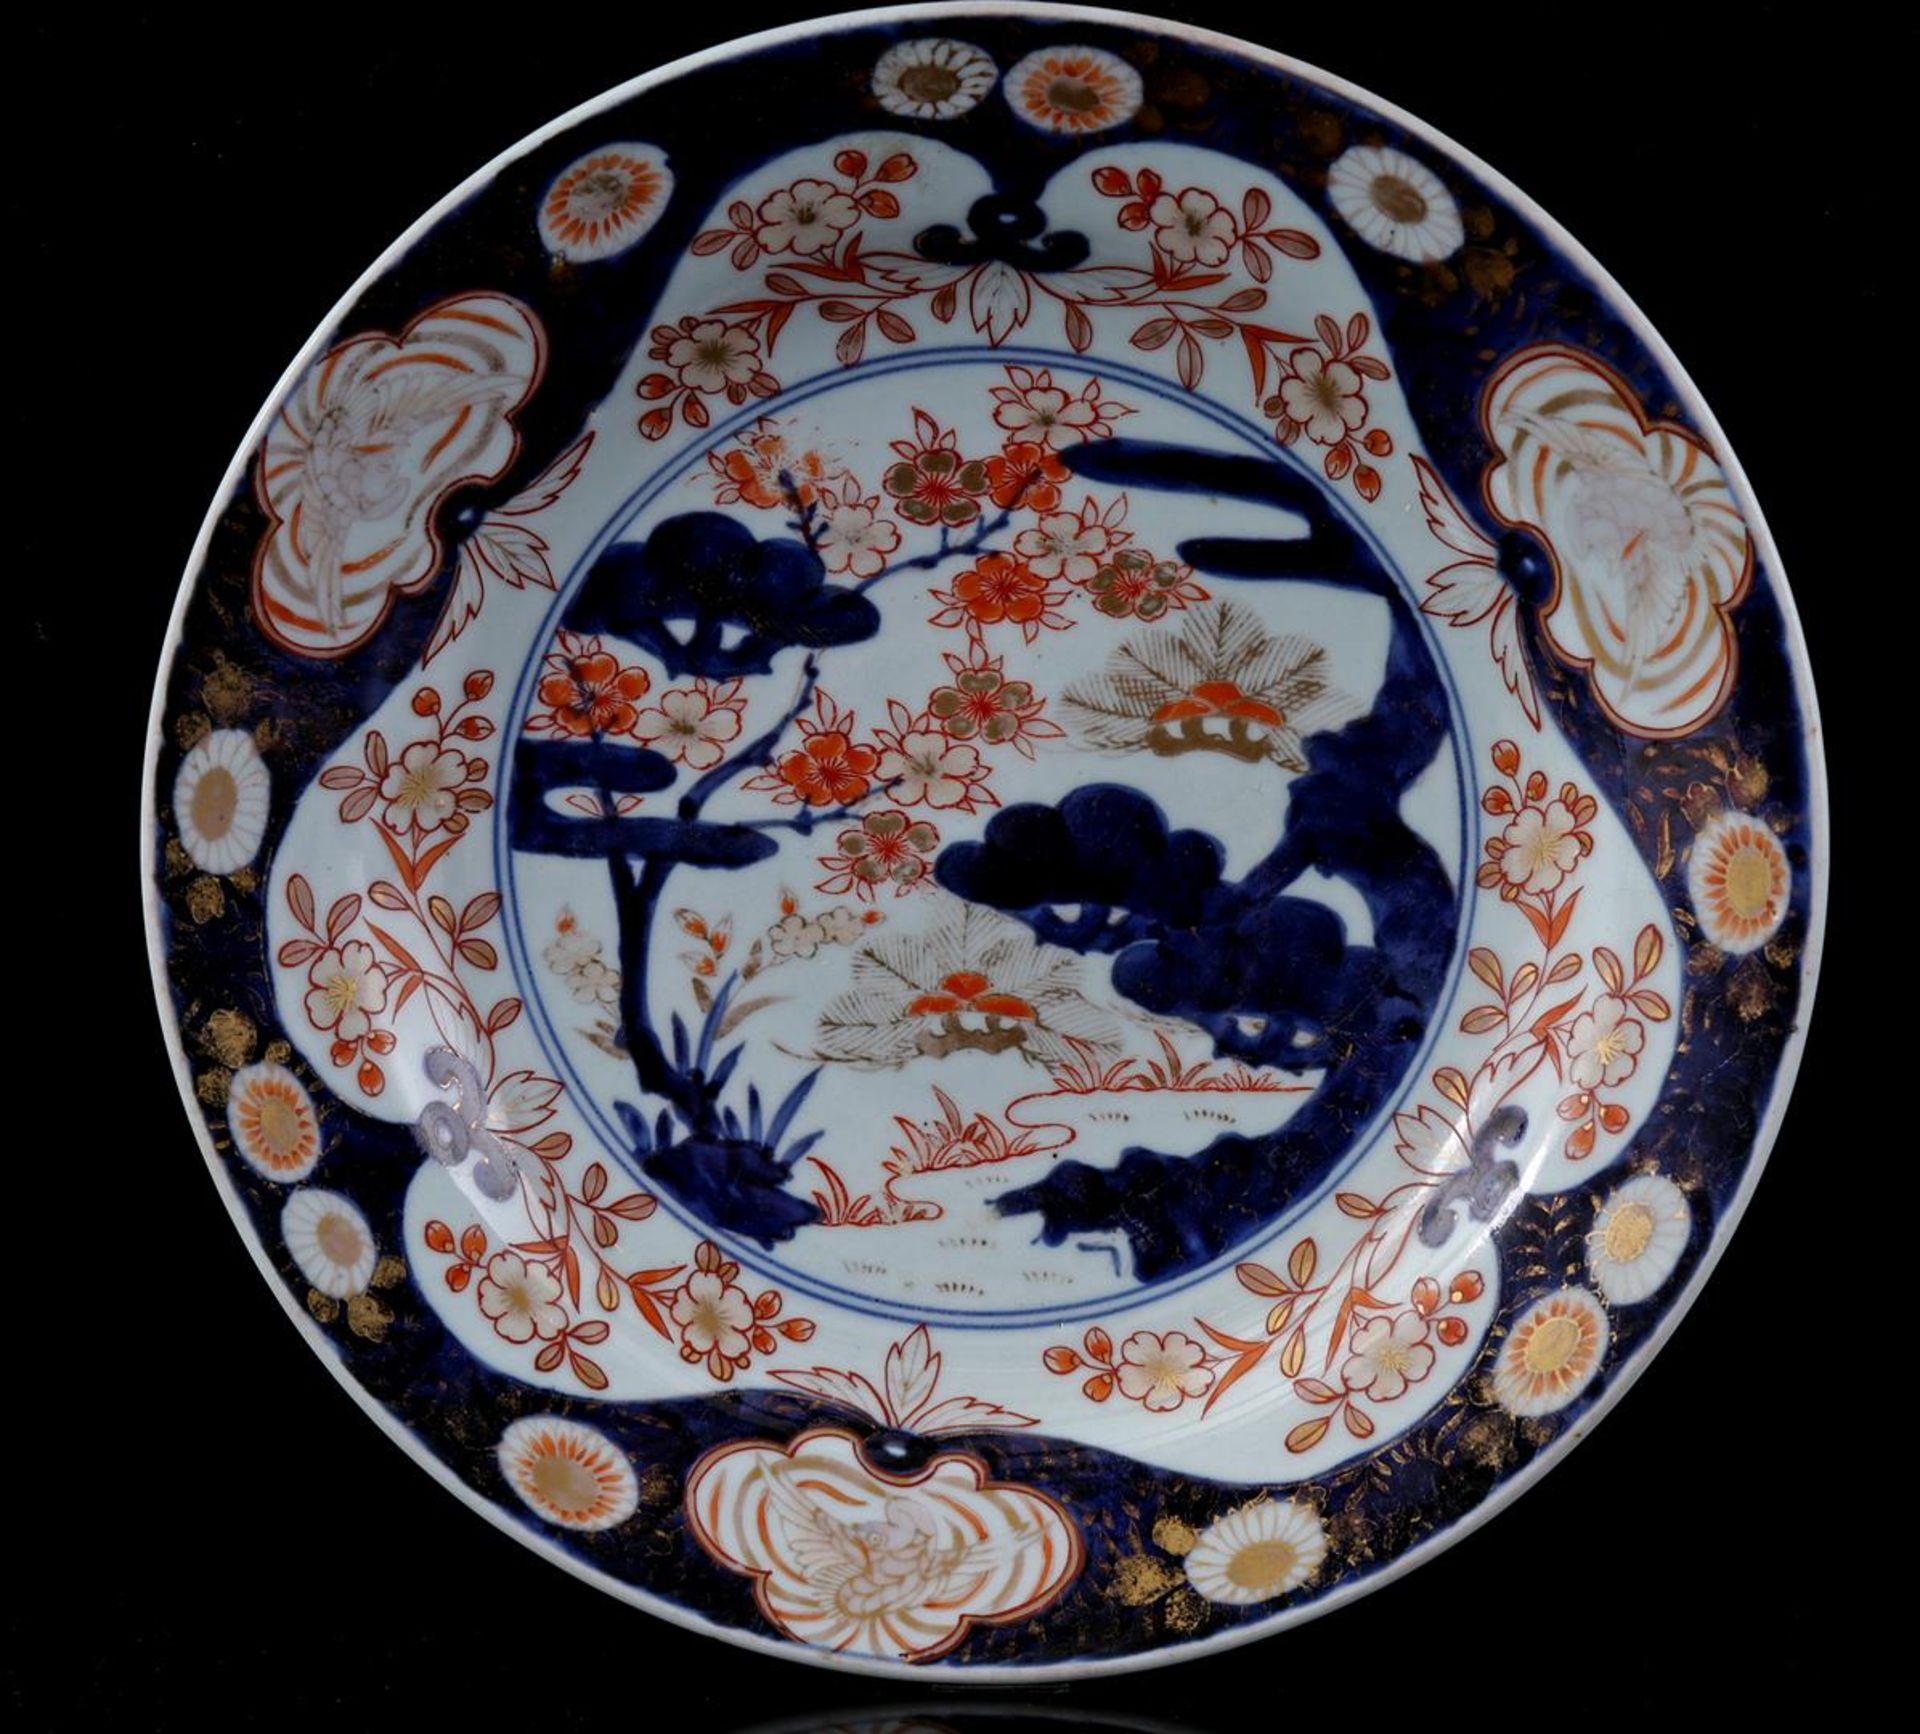 Porcelain Imari dish, Japan 18th